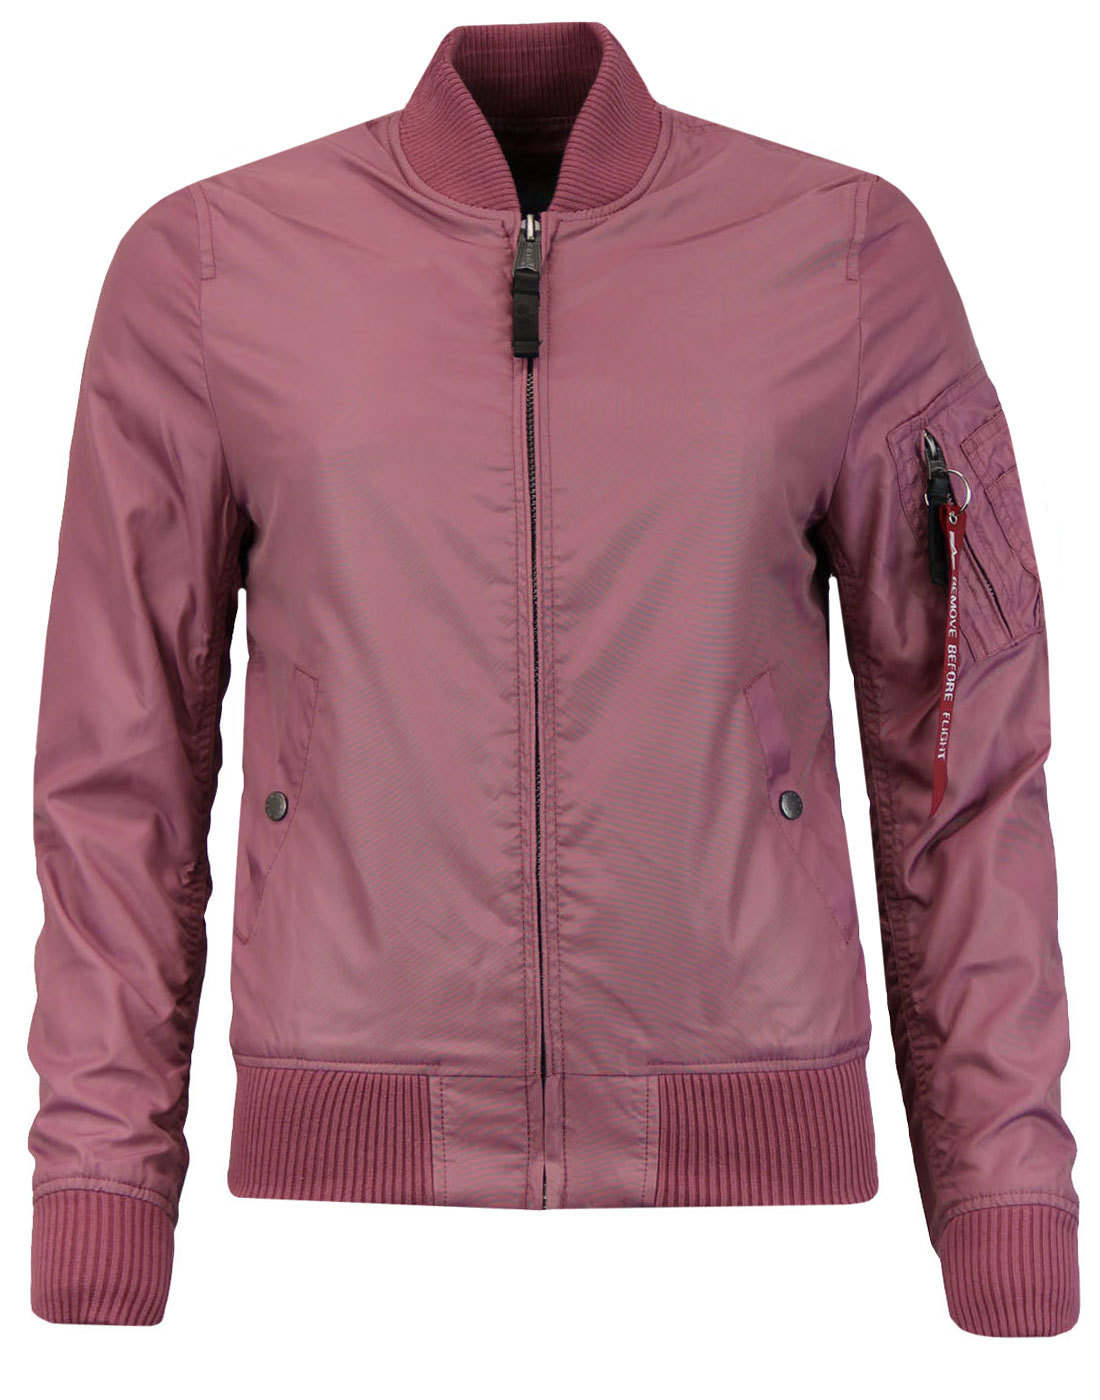 TT Womens INDUSTRIES Jacket Pink Retro Dusty Mod ALPHA Bomber MA1